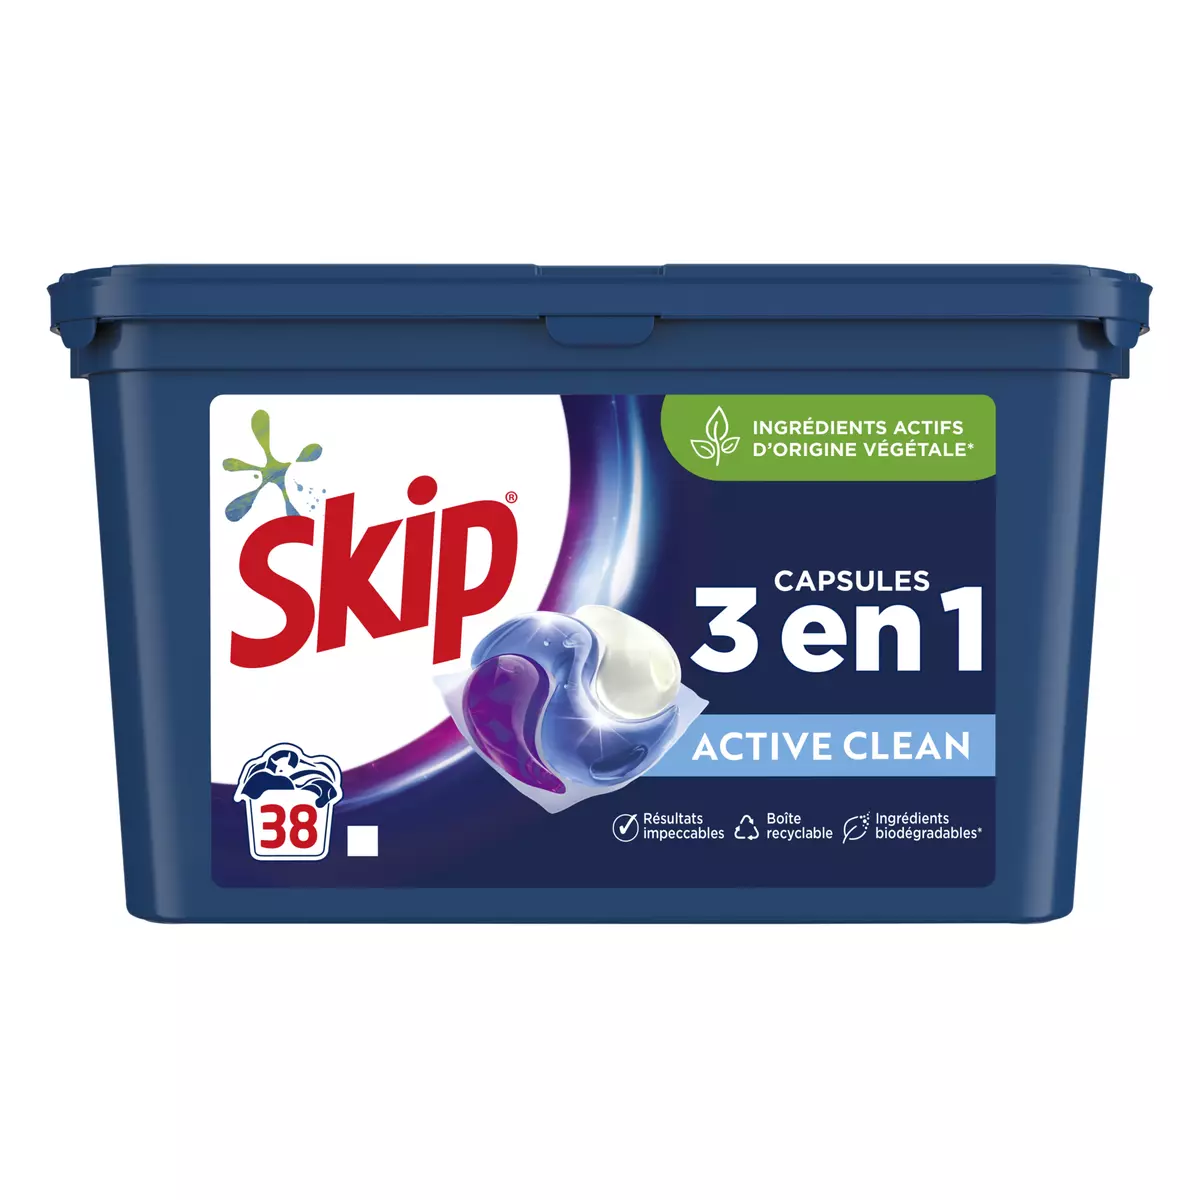 SKIP Active Clean lessive capsules 3en1 38 capsules